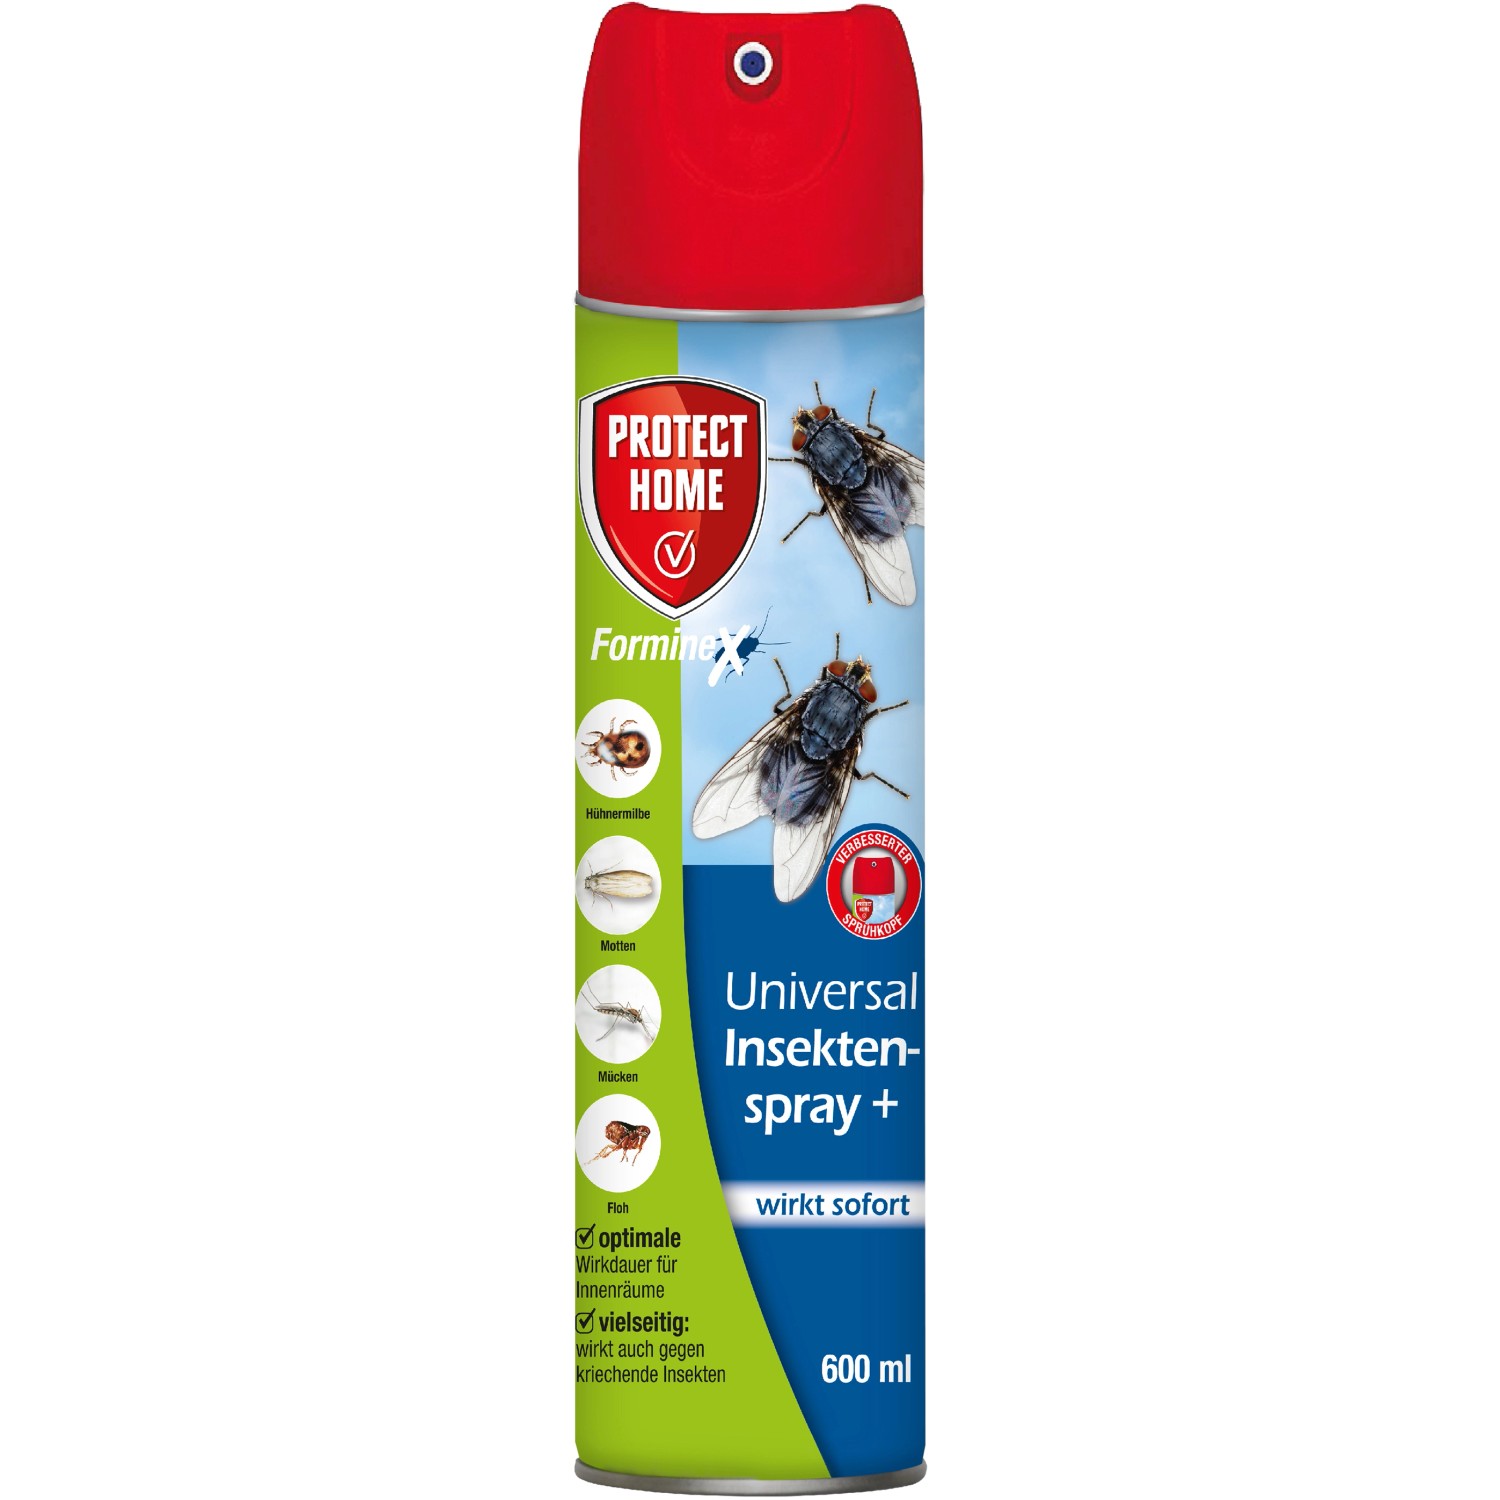 Protect Home FormineX Universal Insektenspray + 600 ml